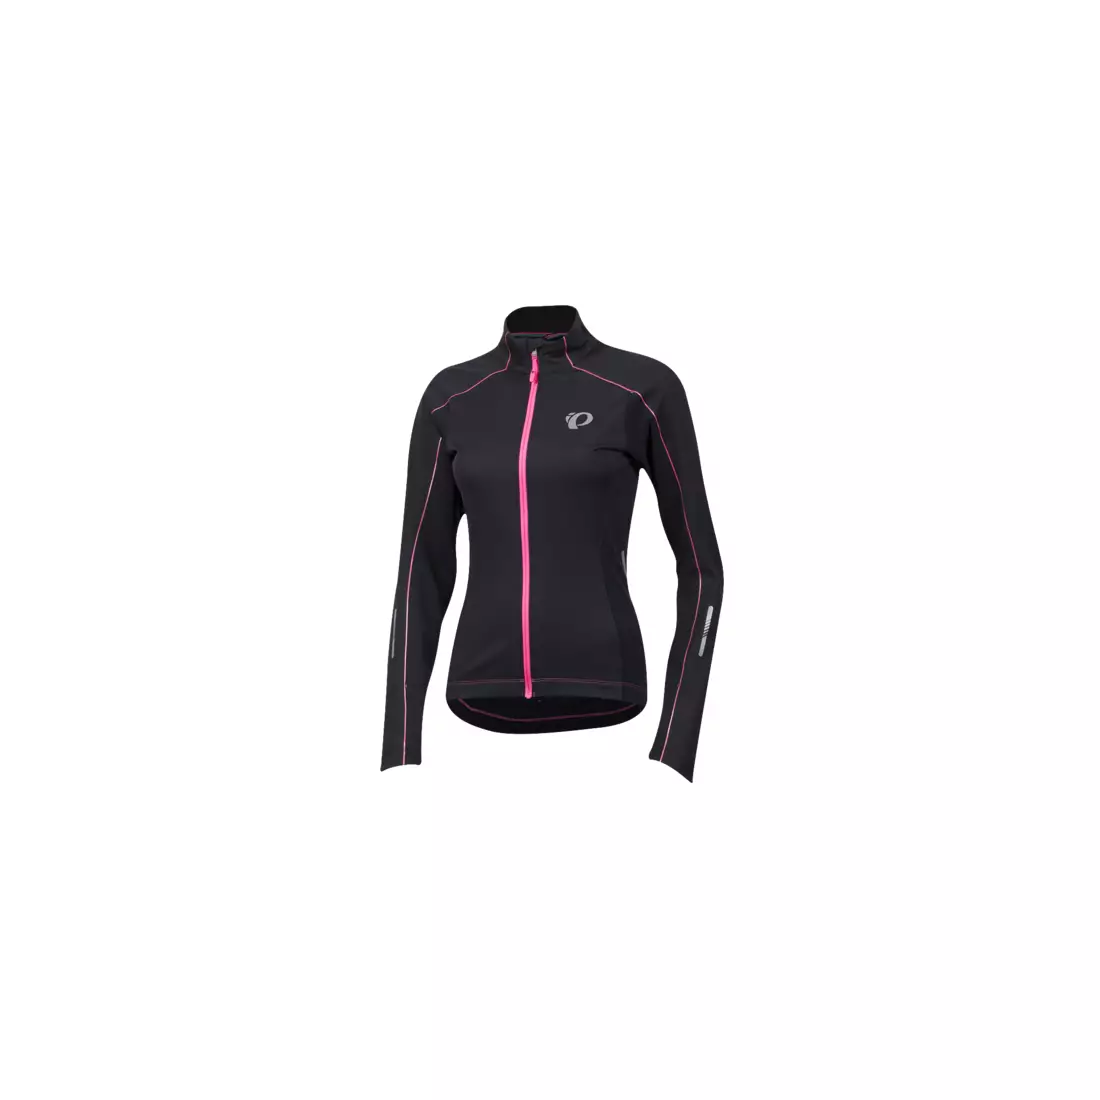 PEARL IZUMI ELITE PURSUIT - dámska zimná softshellová cyklistická bunda, čierno-ružová 11231601-021